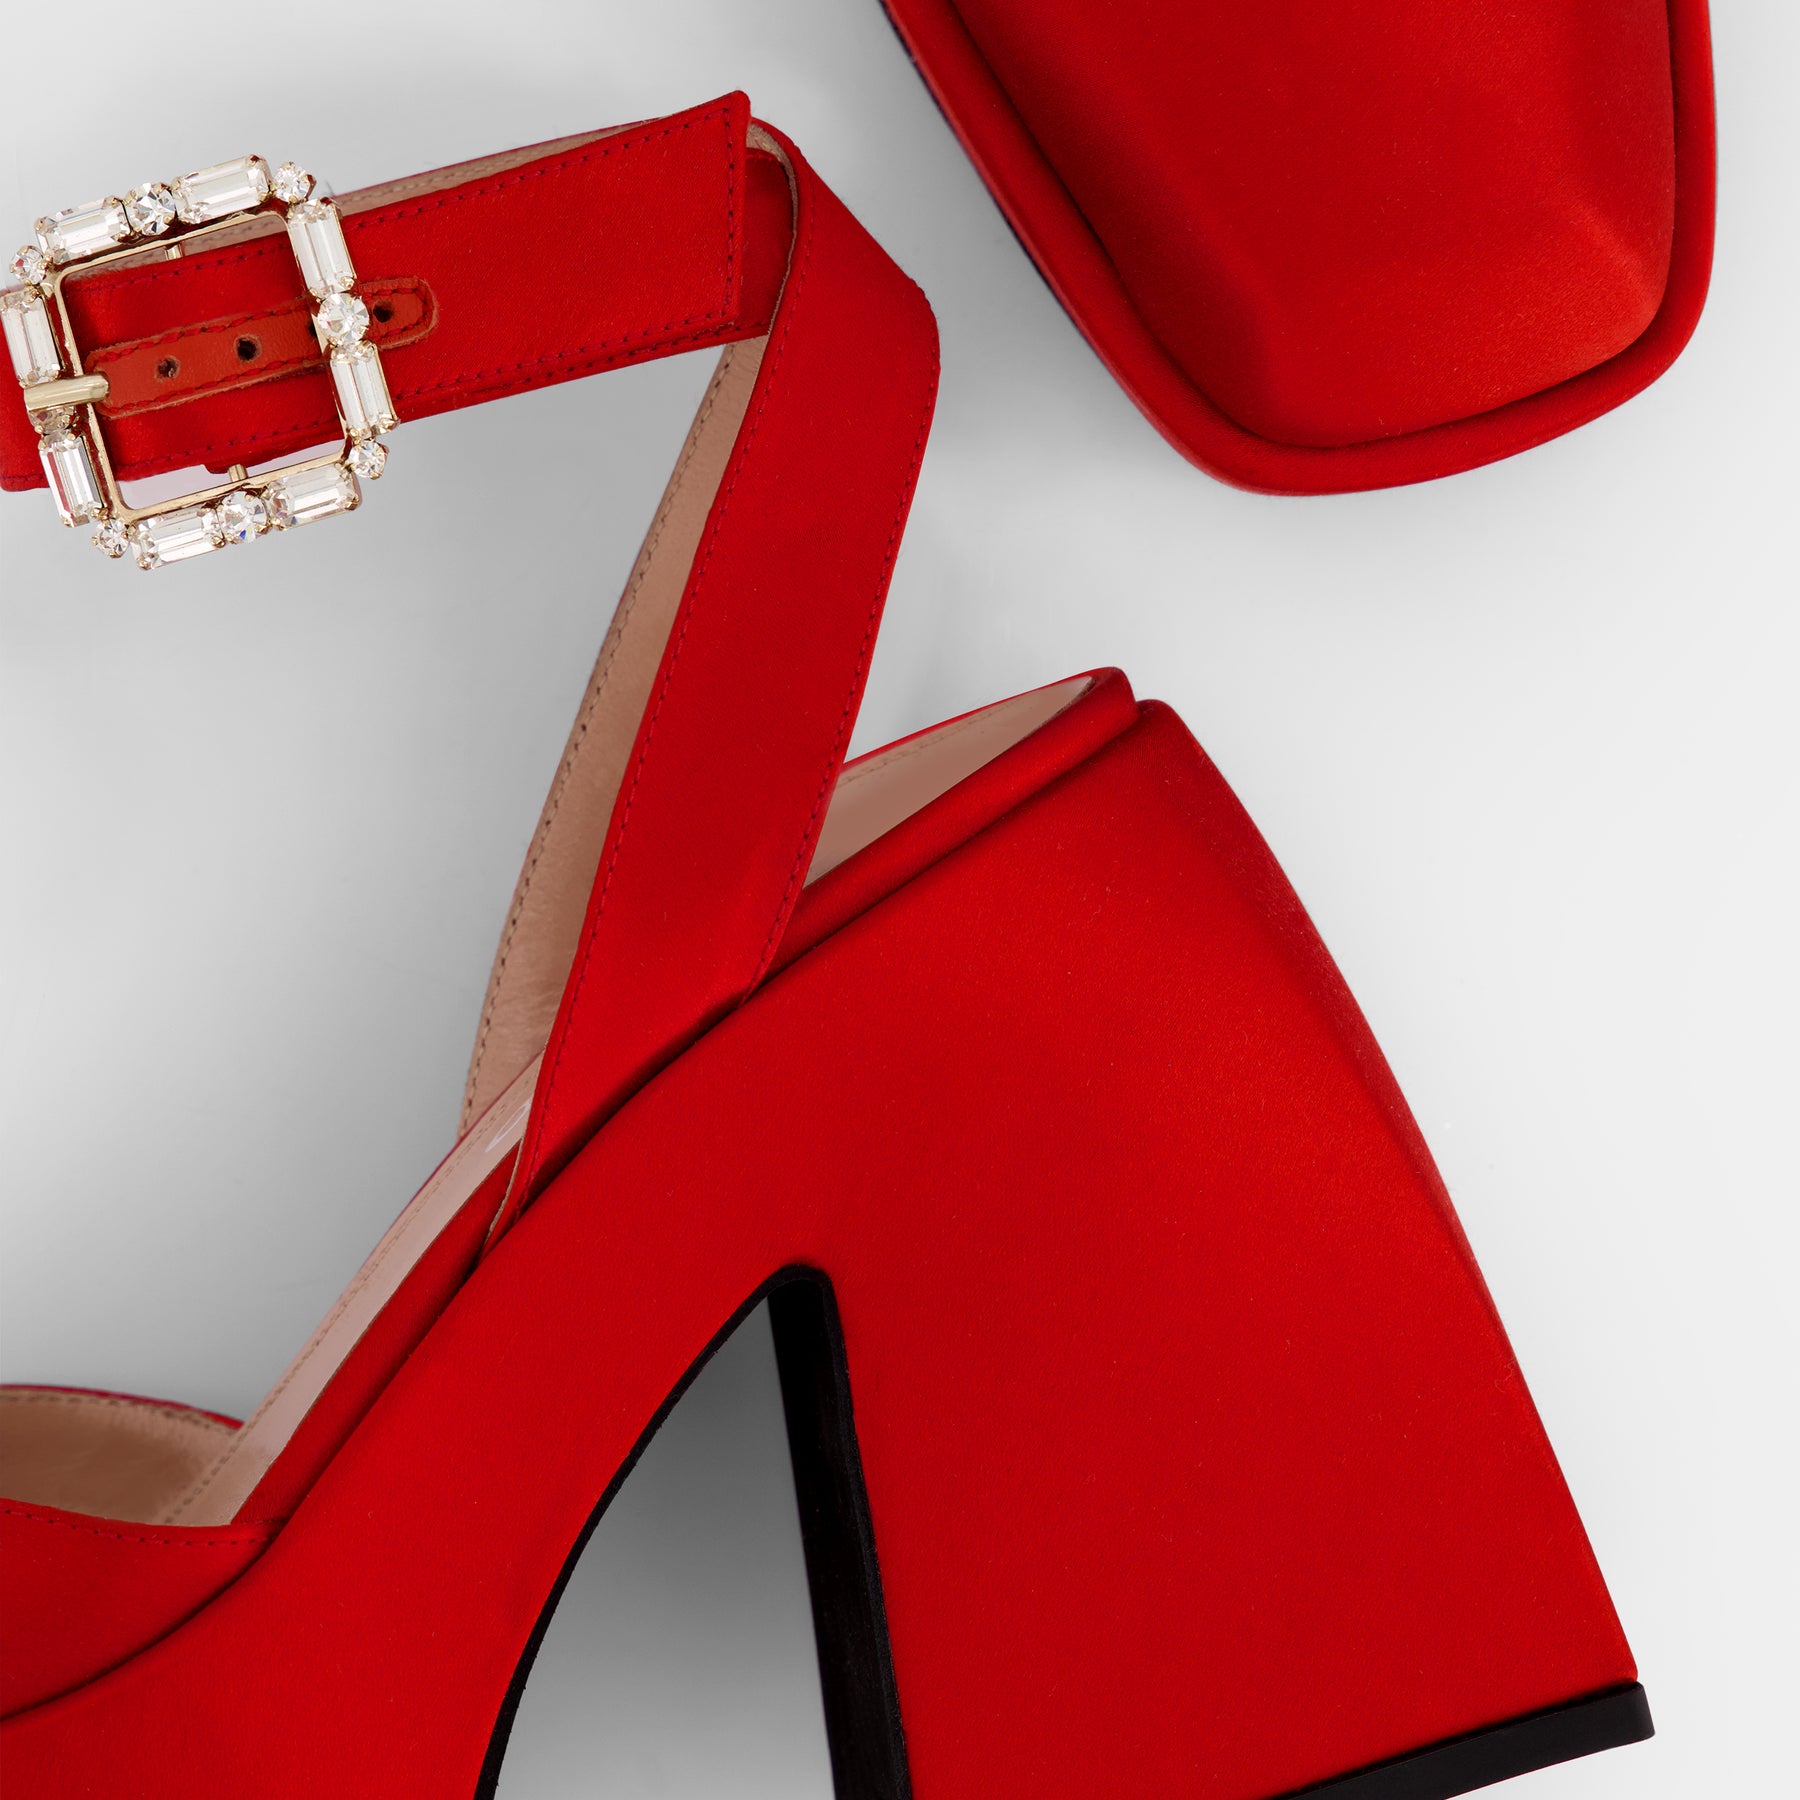 RAID Zylee heeled shoe with hardware in burgundy crinkle | ASOS